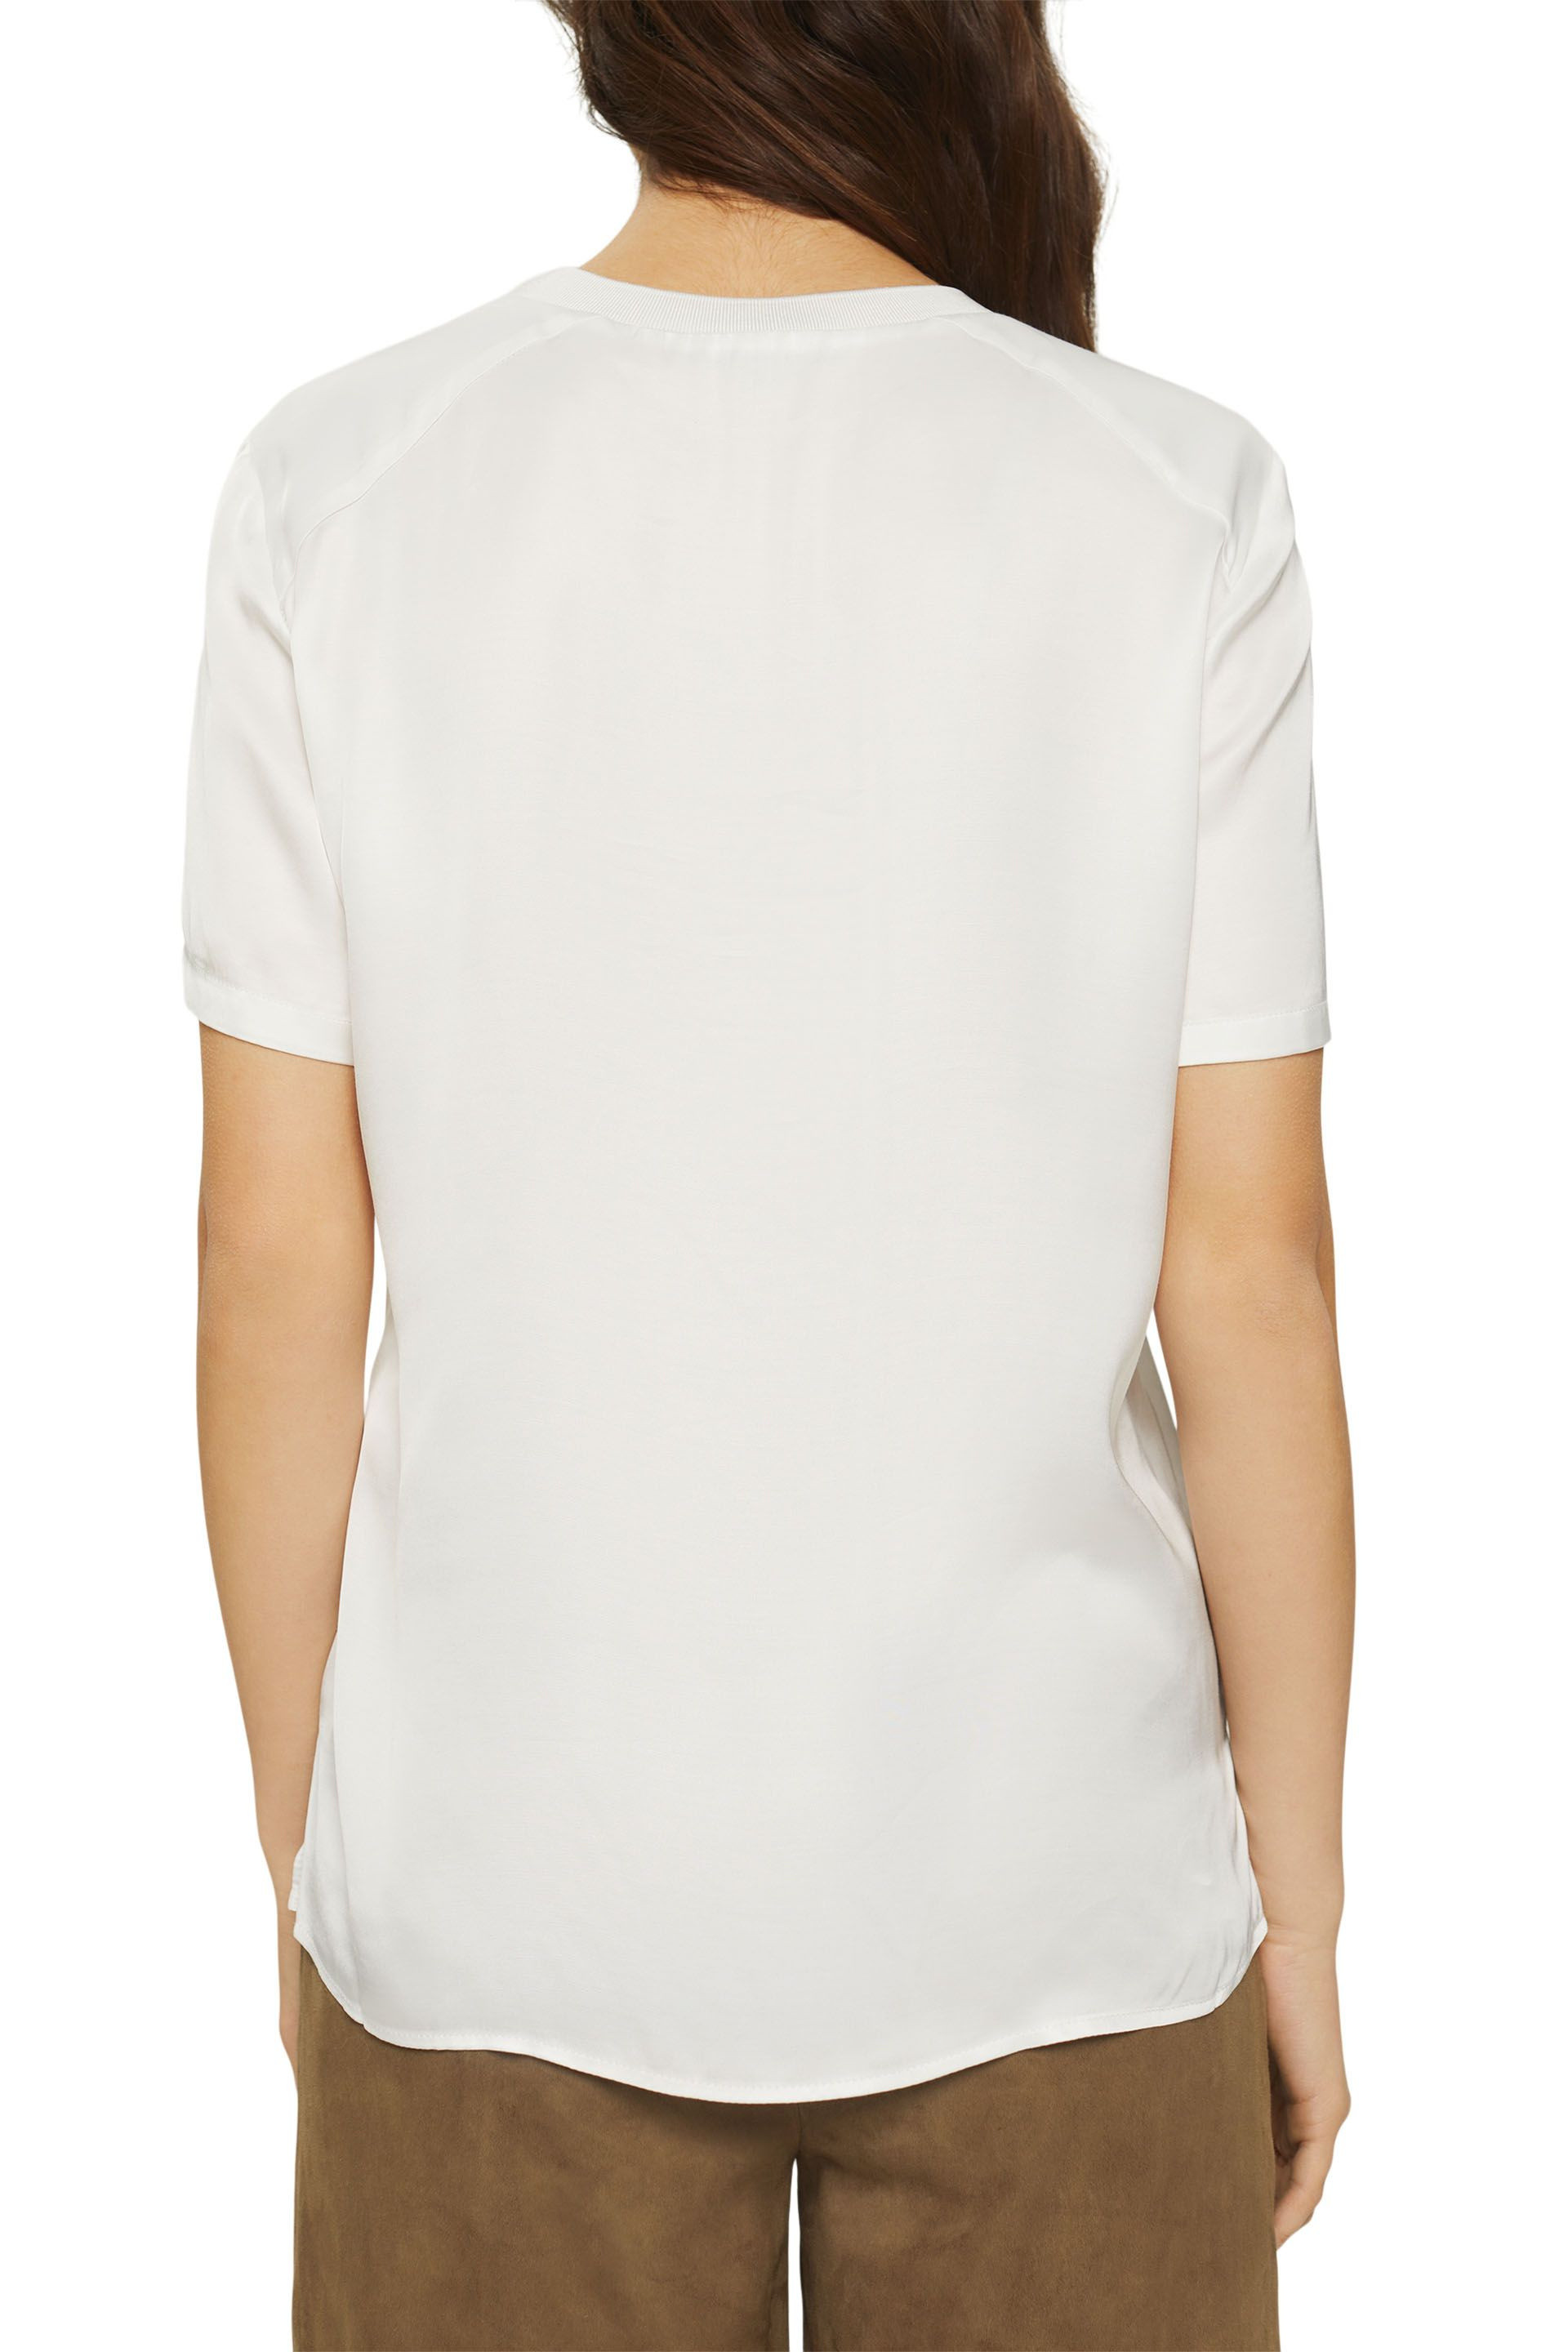 Short-sleeved silk-effect blouse, White, large image number 2